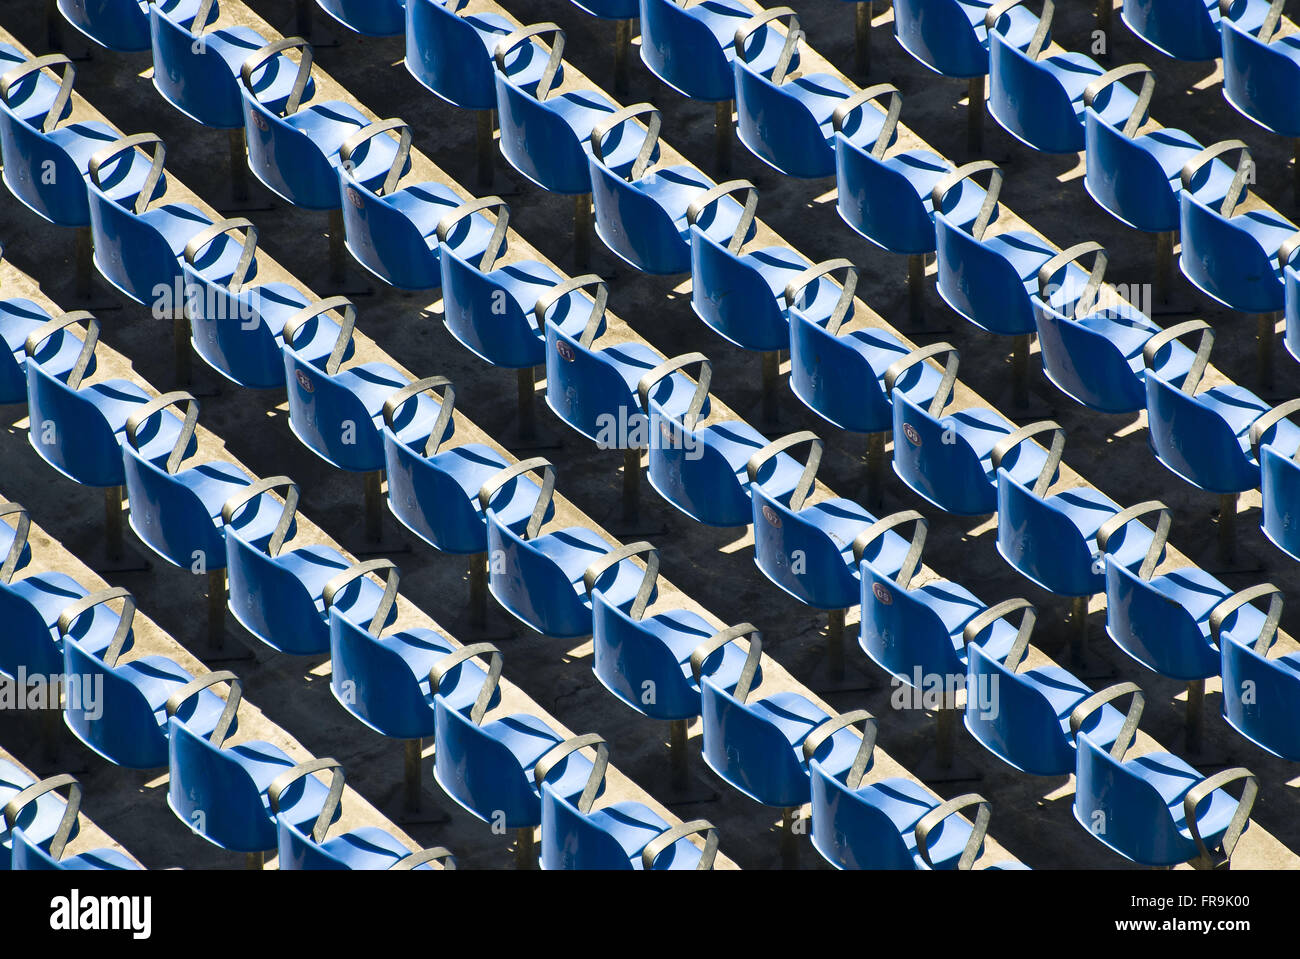 Chairs Estadio do Maracana - preparatory works before the World Cup 2014 Stock Photo